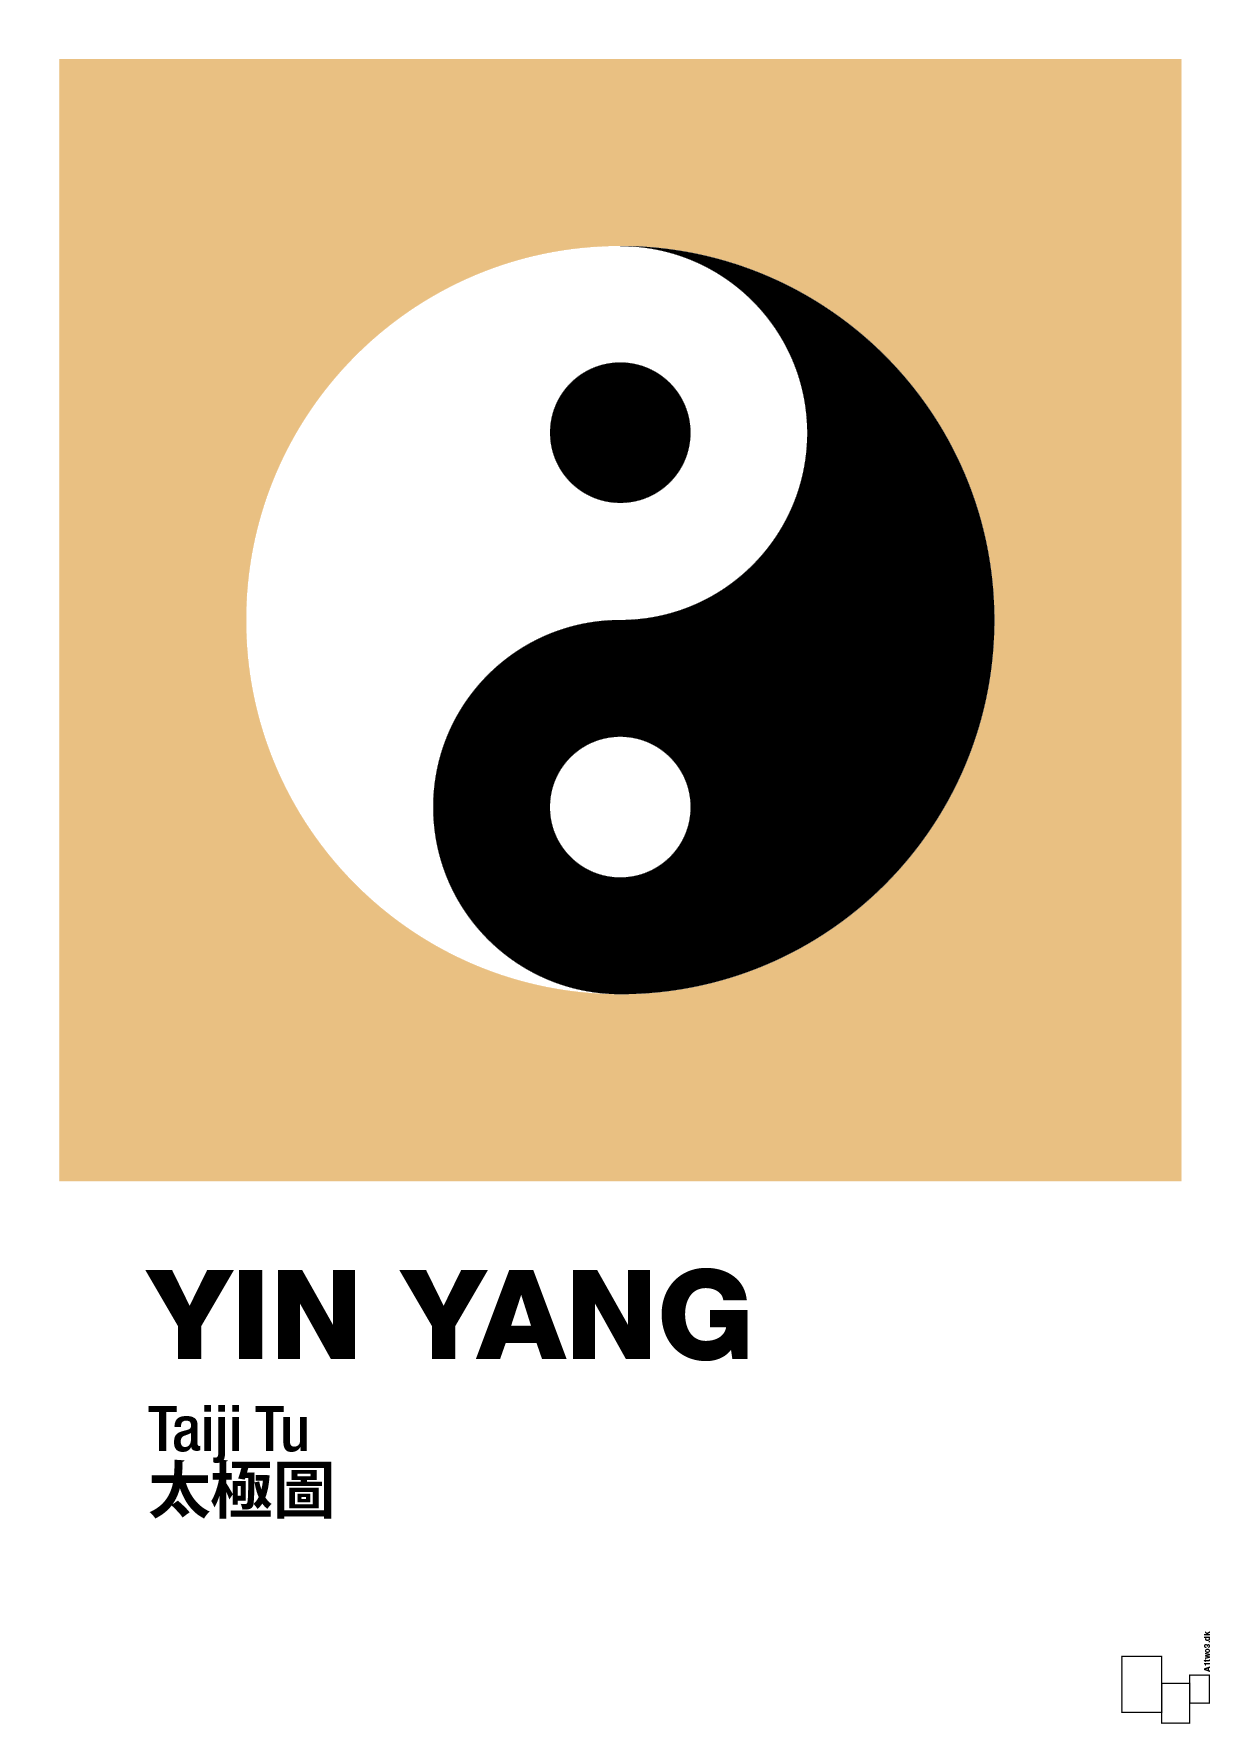 yin yang - Plakat med Videnskab i Charismatic